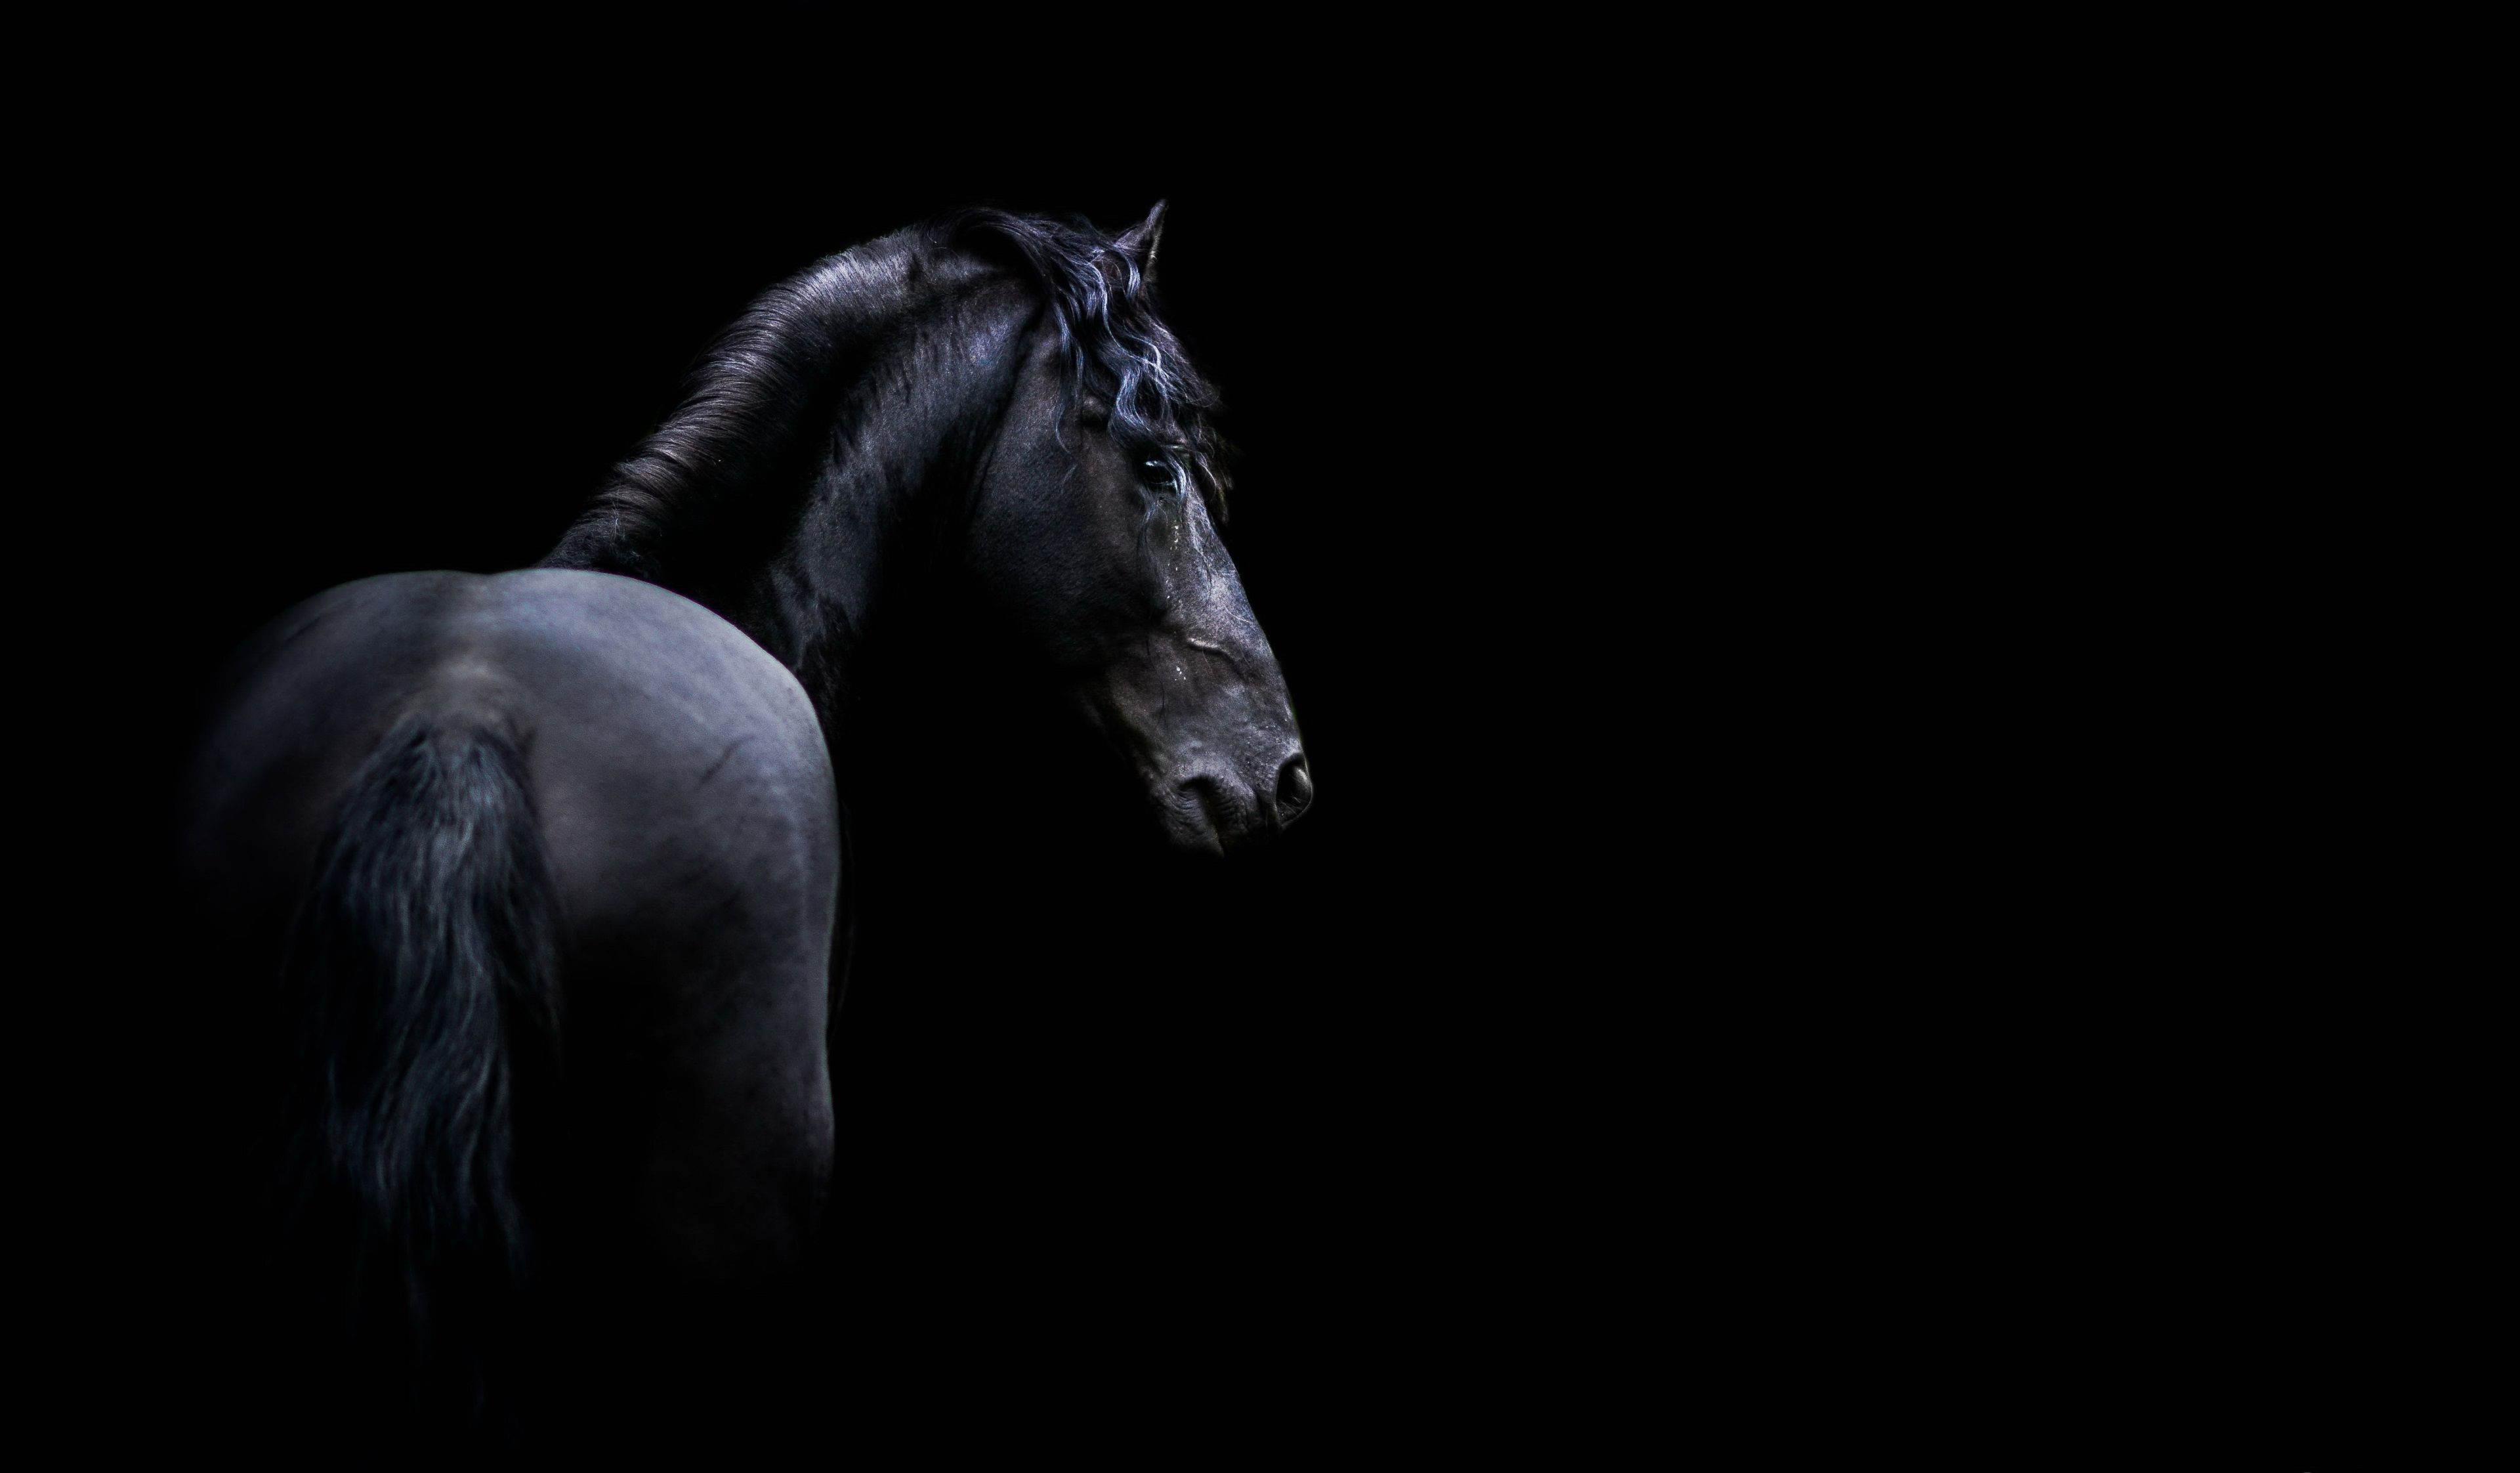 X dark horse k wallpaper download for pc black horse horse wallpaper horses